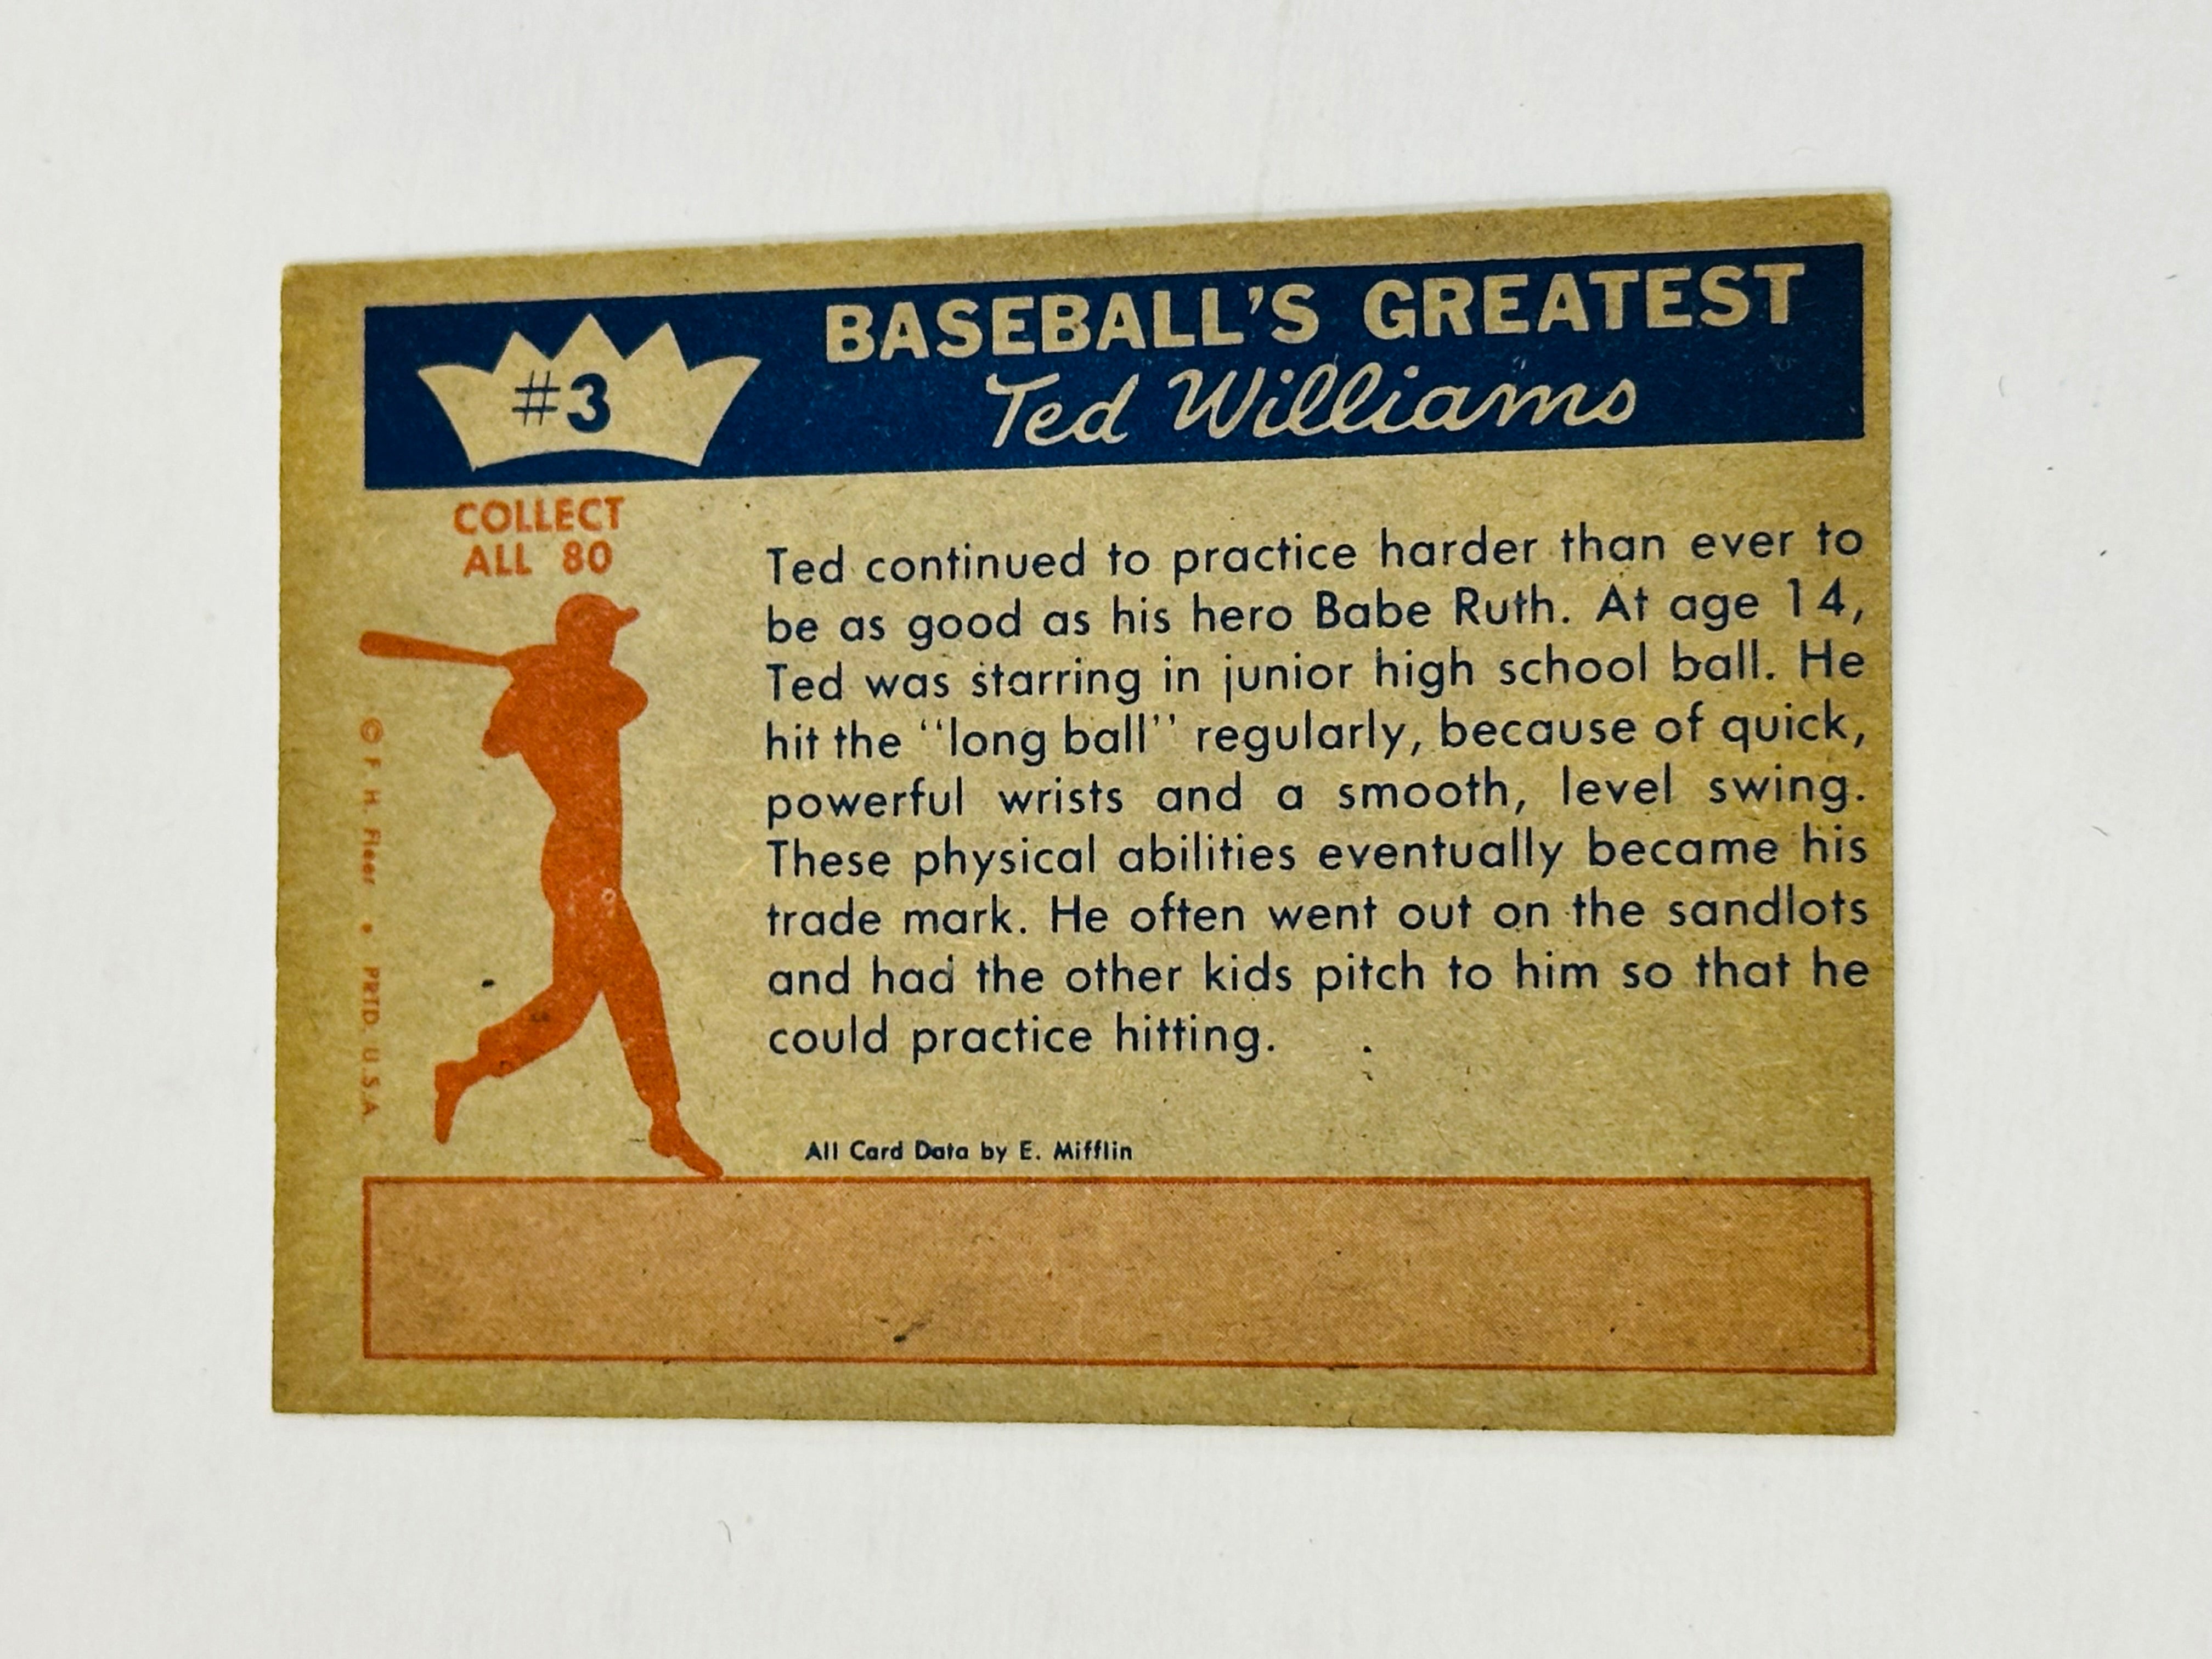 Ted Williams Practice Makes Perfect rare Fleer baseball card 1959